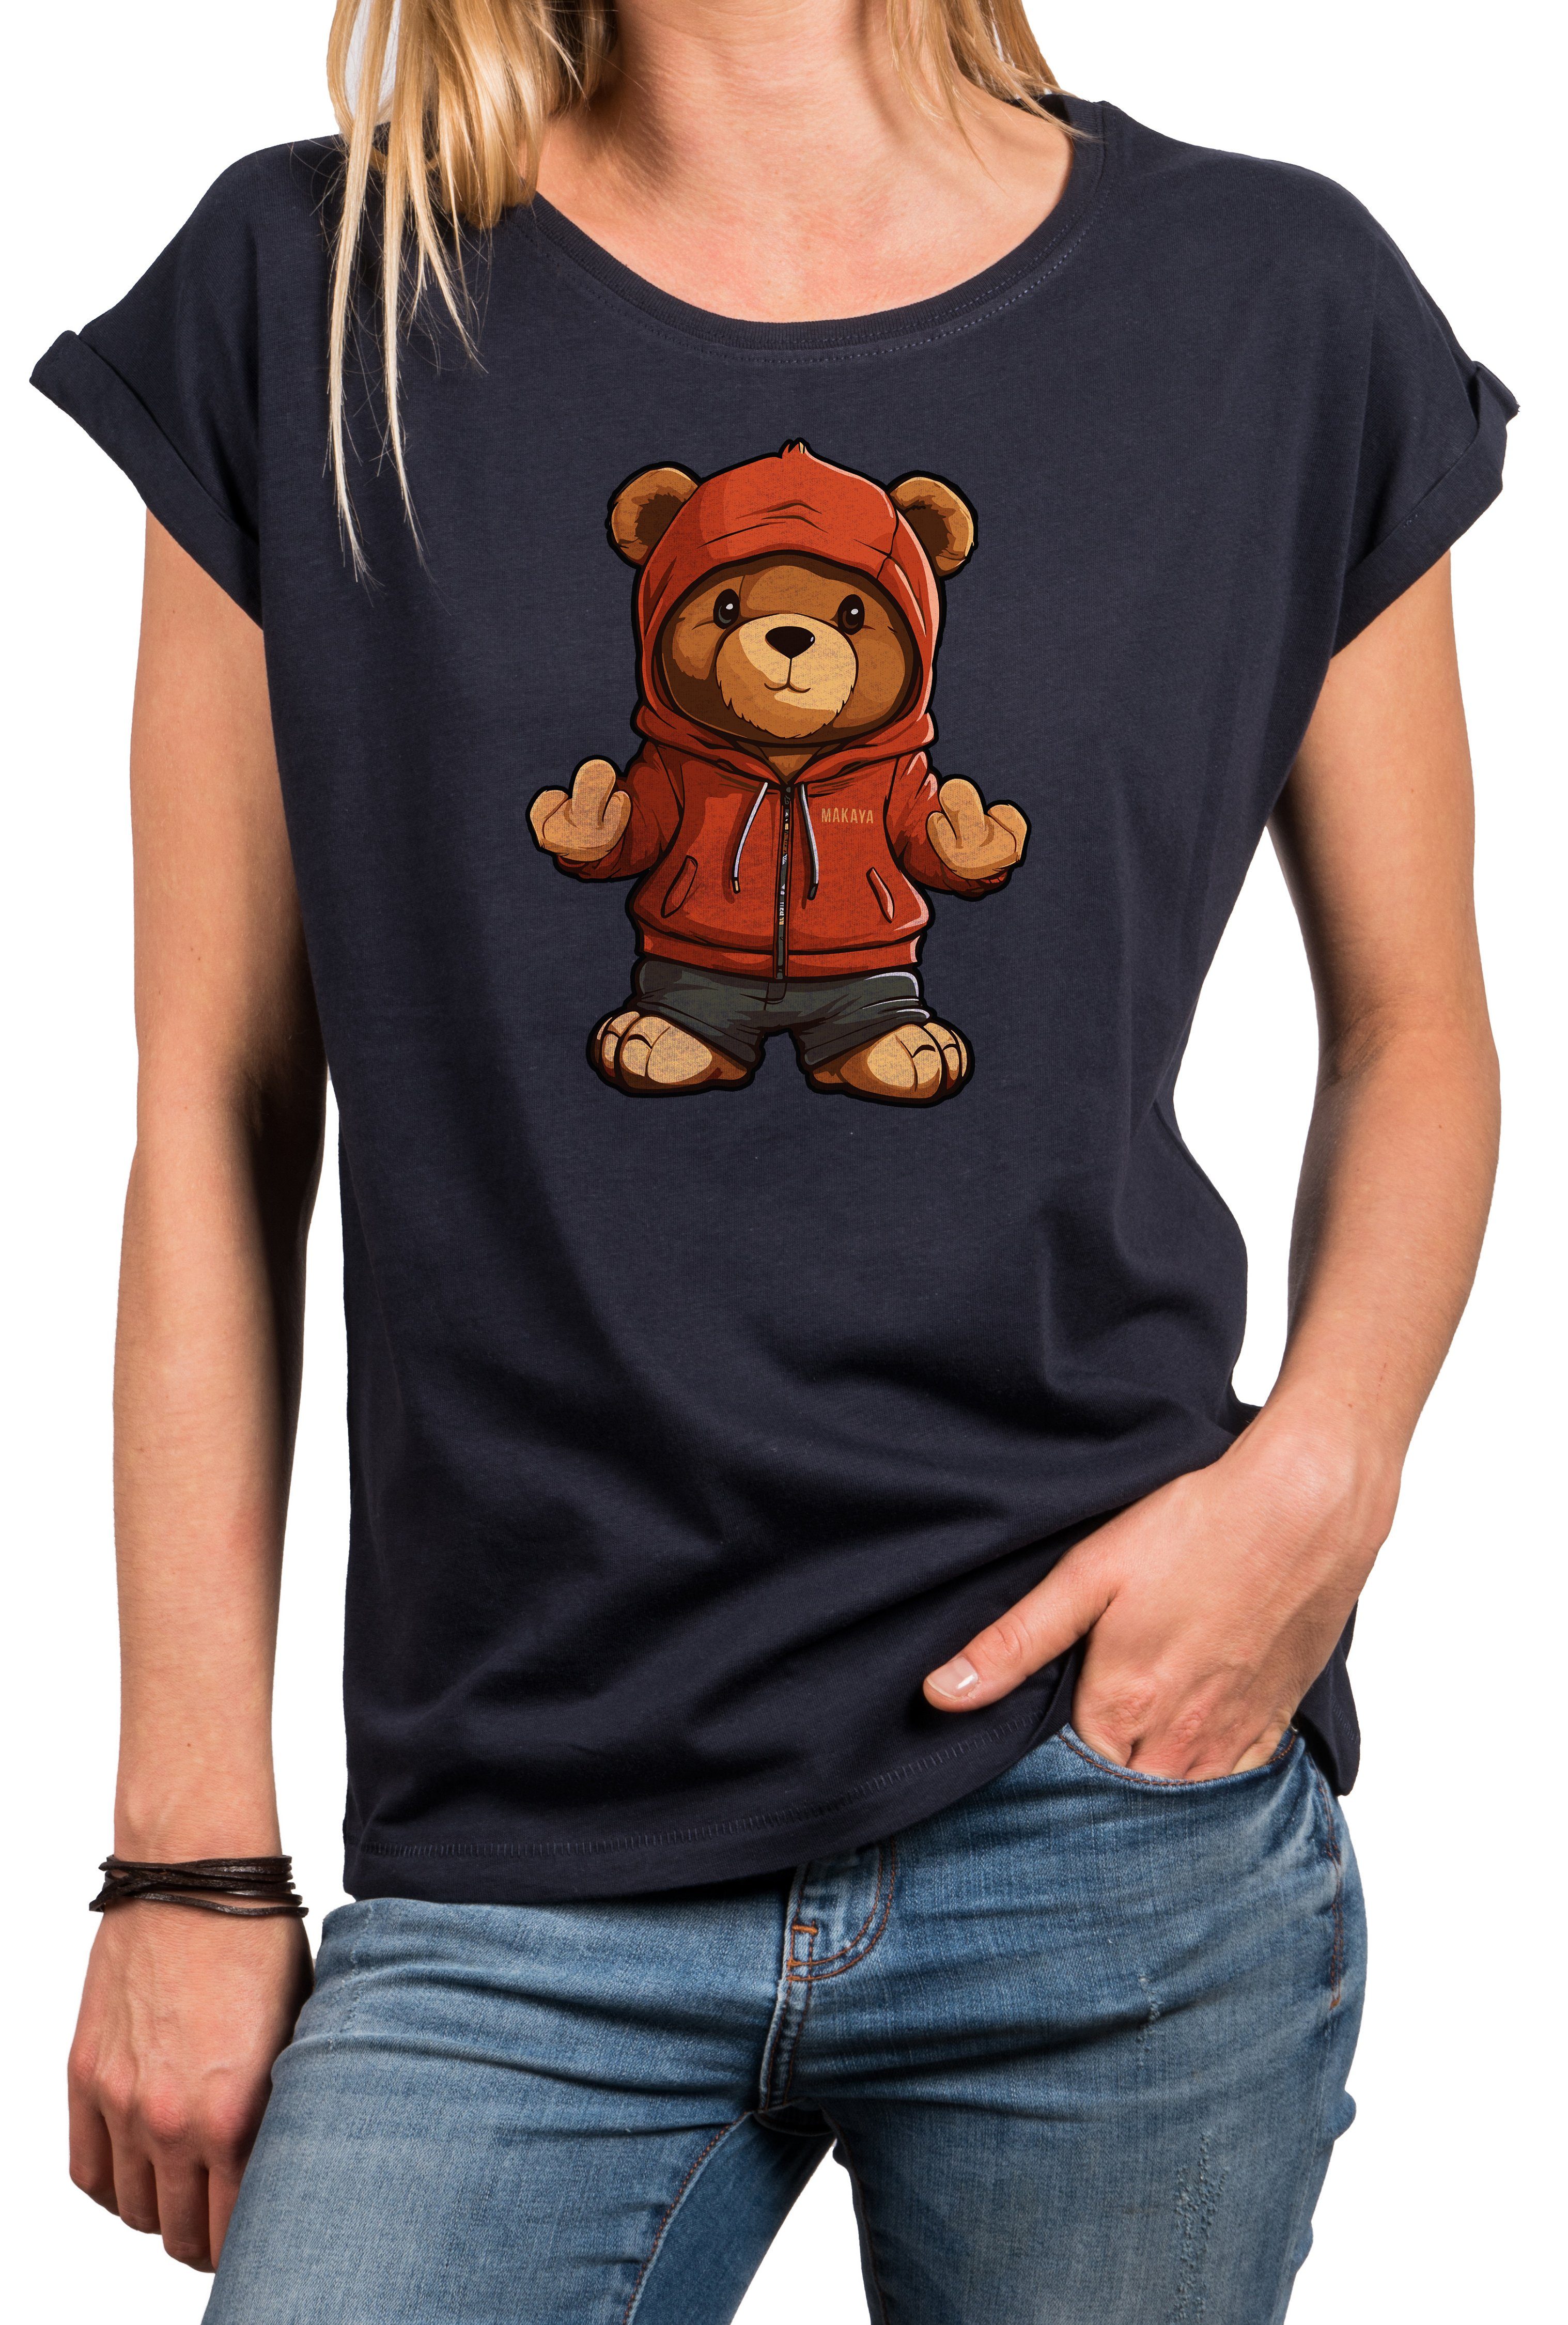 MAKAYA Print-Shirt Damen Kurzarm Teddybär coole lustige freche sexy Sommer Tops Teddy, Motiv Blau | T-Shirts